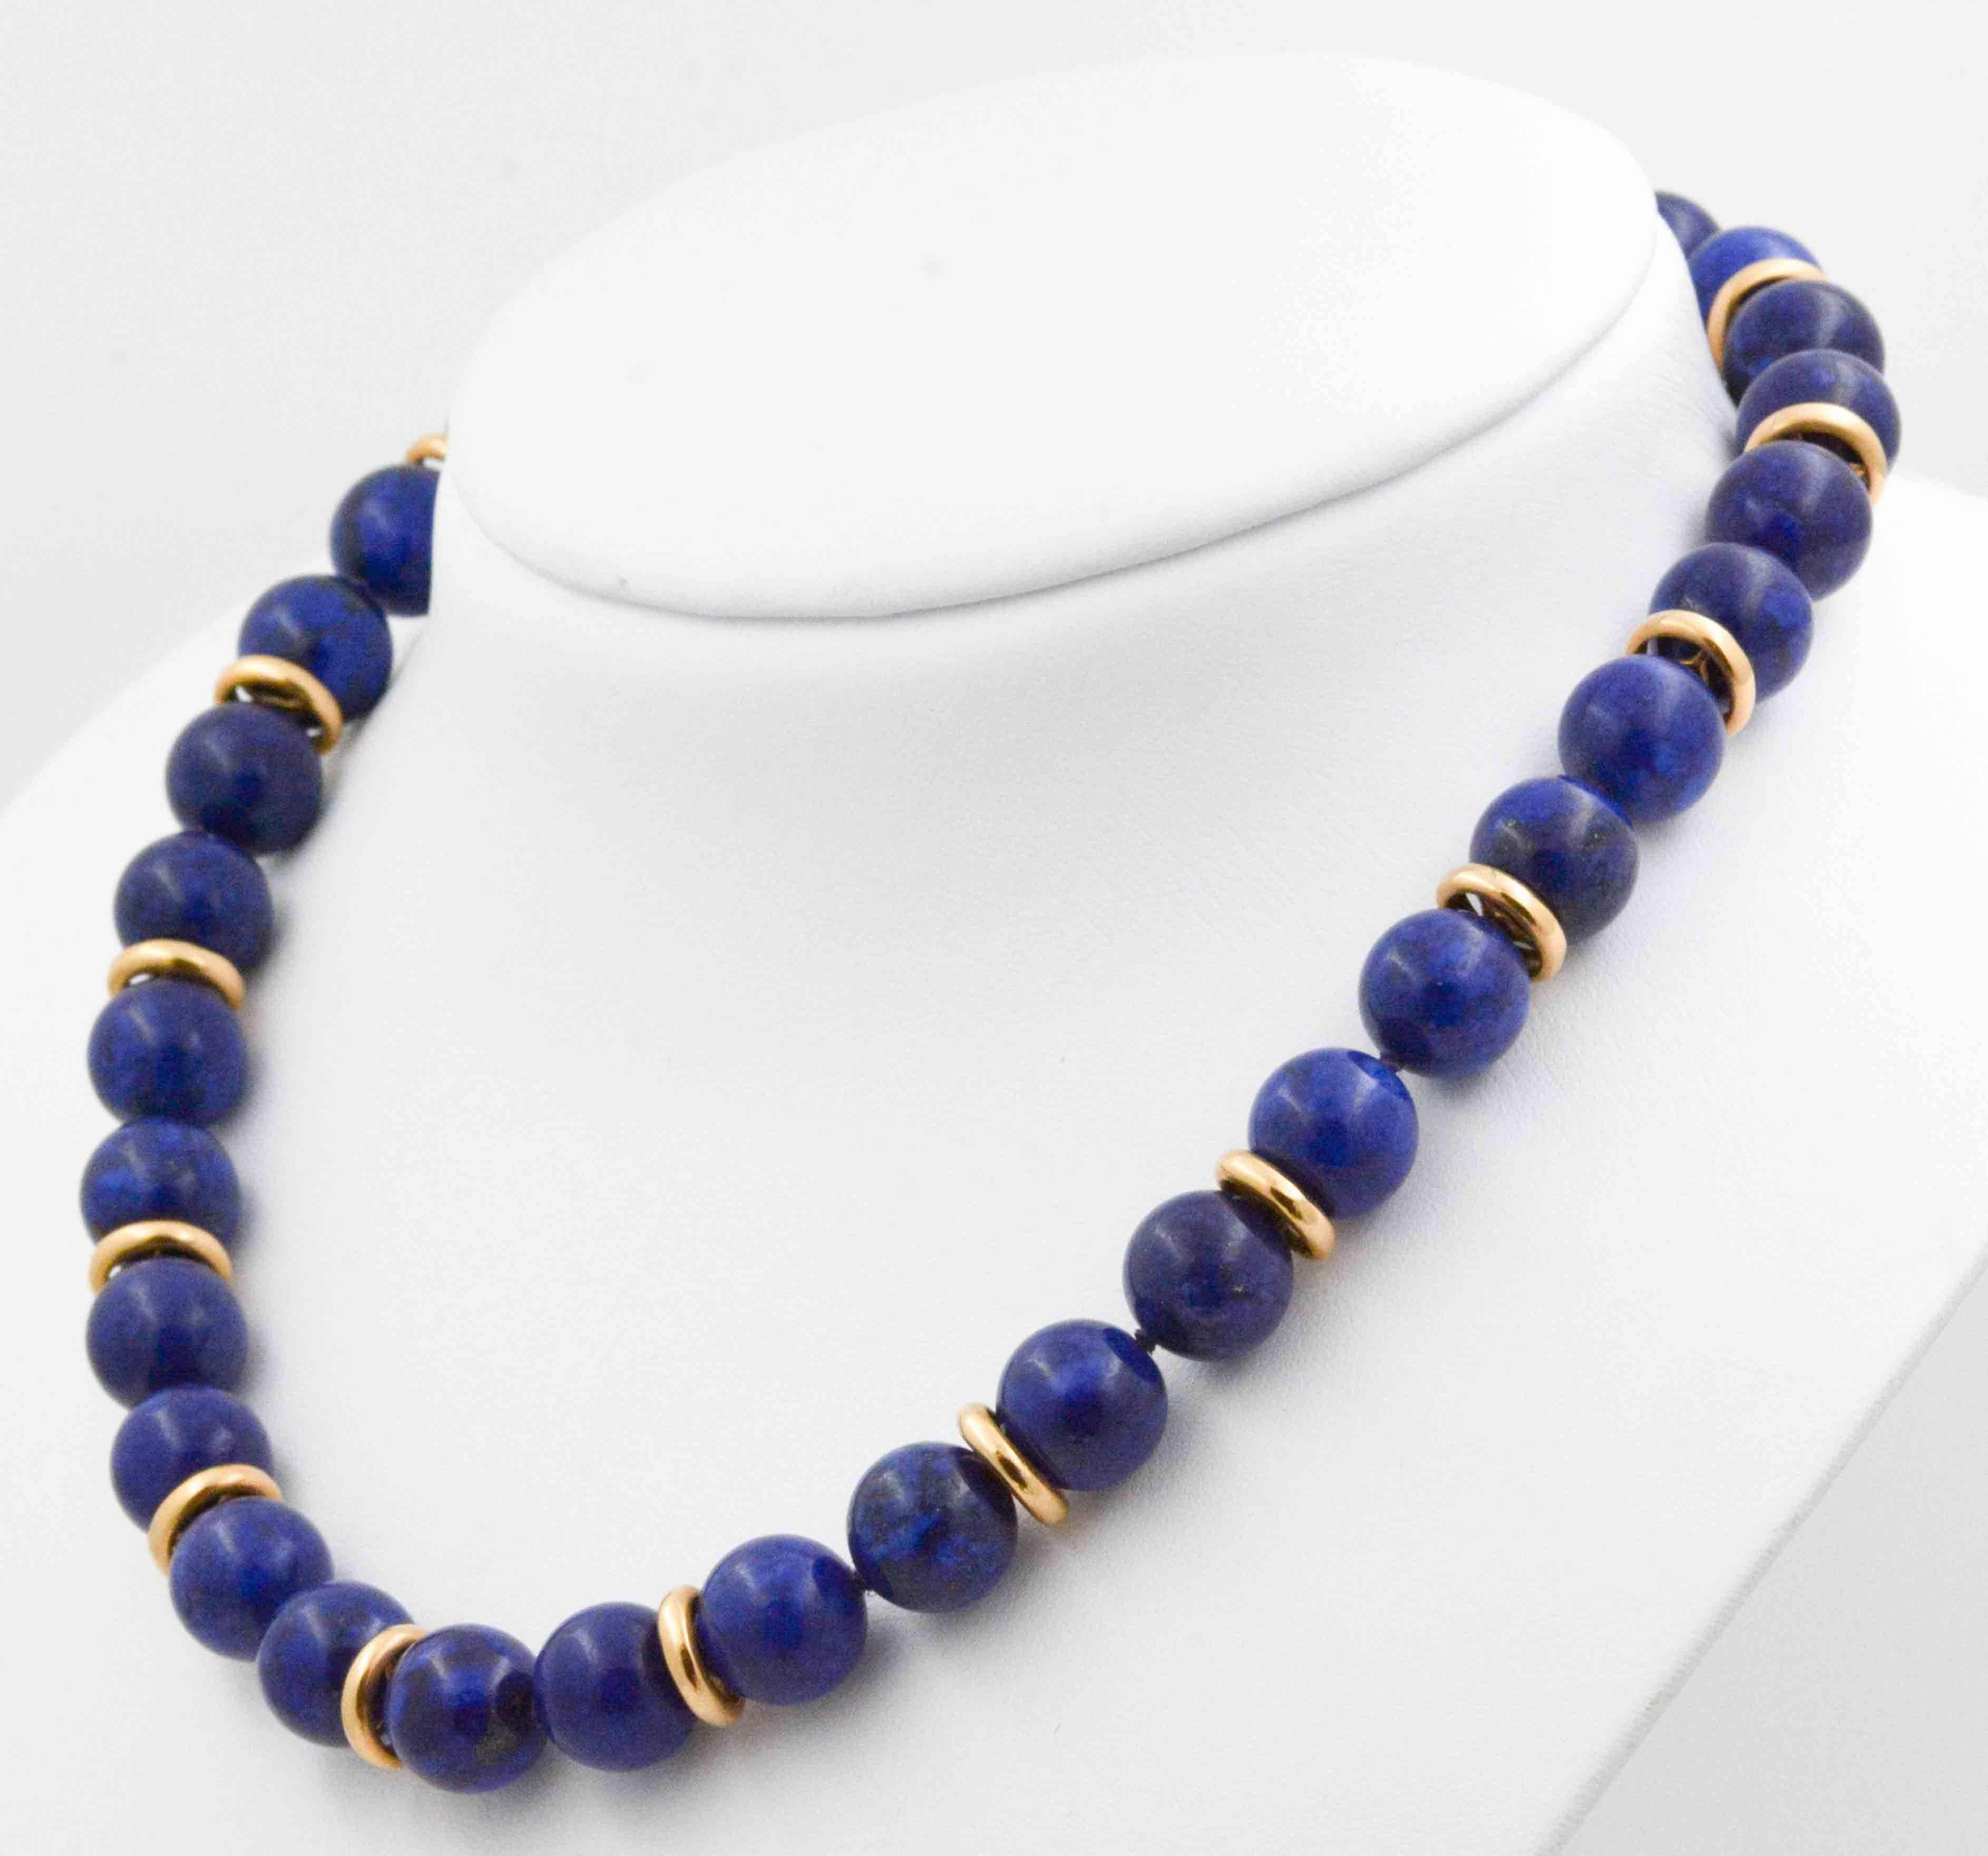 Round Cut Lapis Lazuli Bead Necklace with 14 Karat Yellow Gold